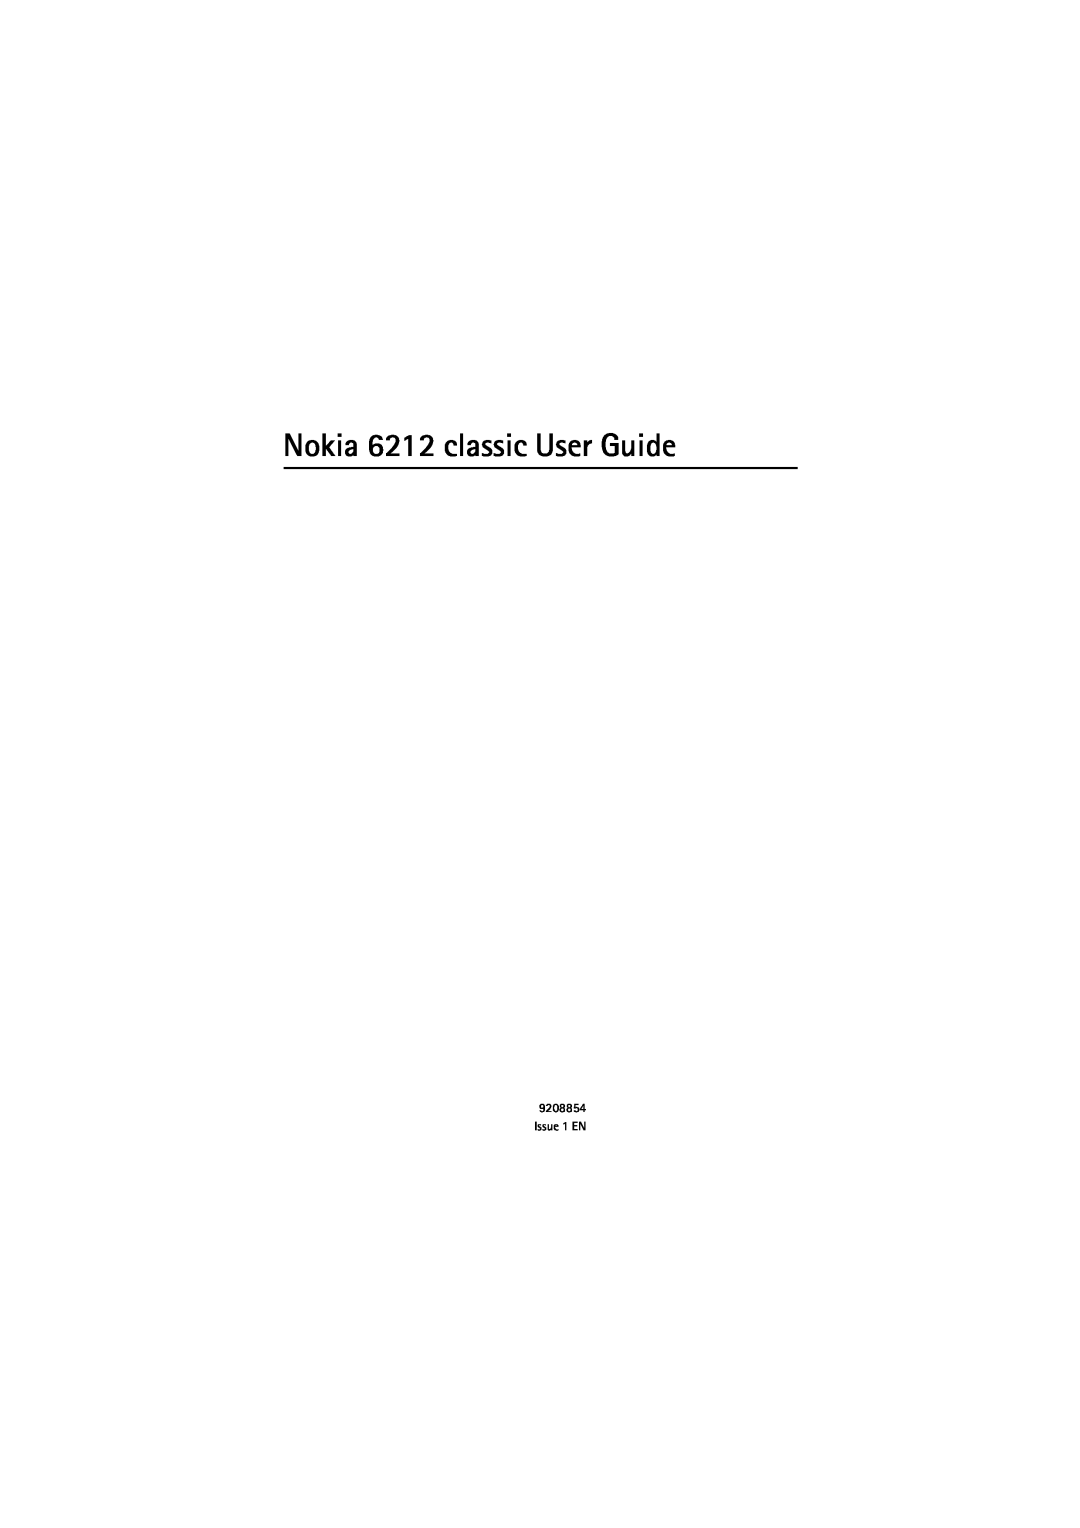 Nokia manual Nokia 6212 classic User Guide, Issue 1 EN 